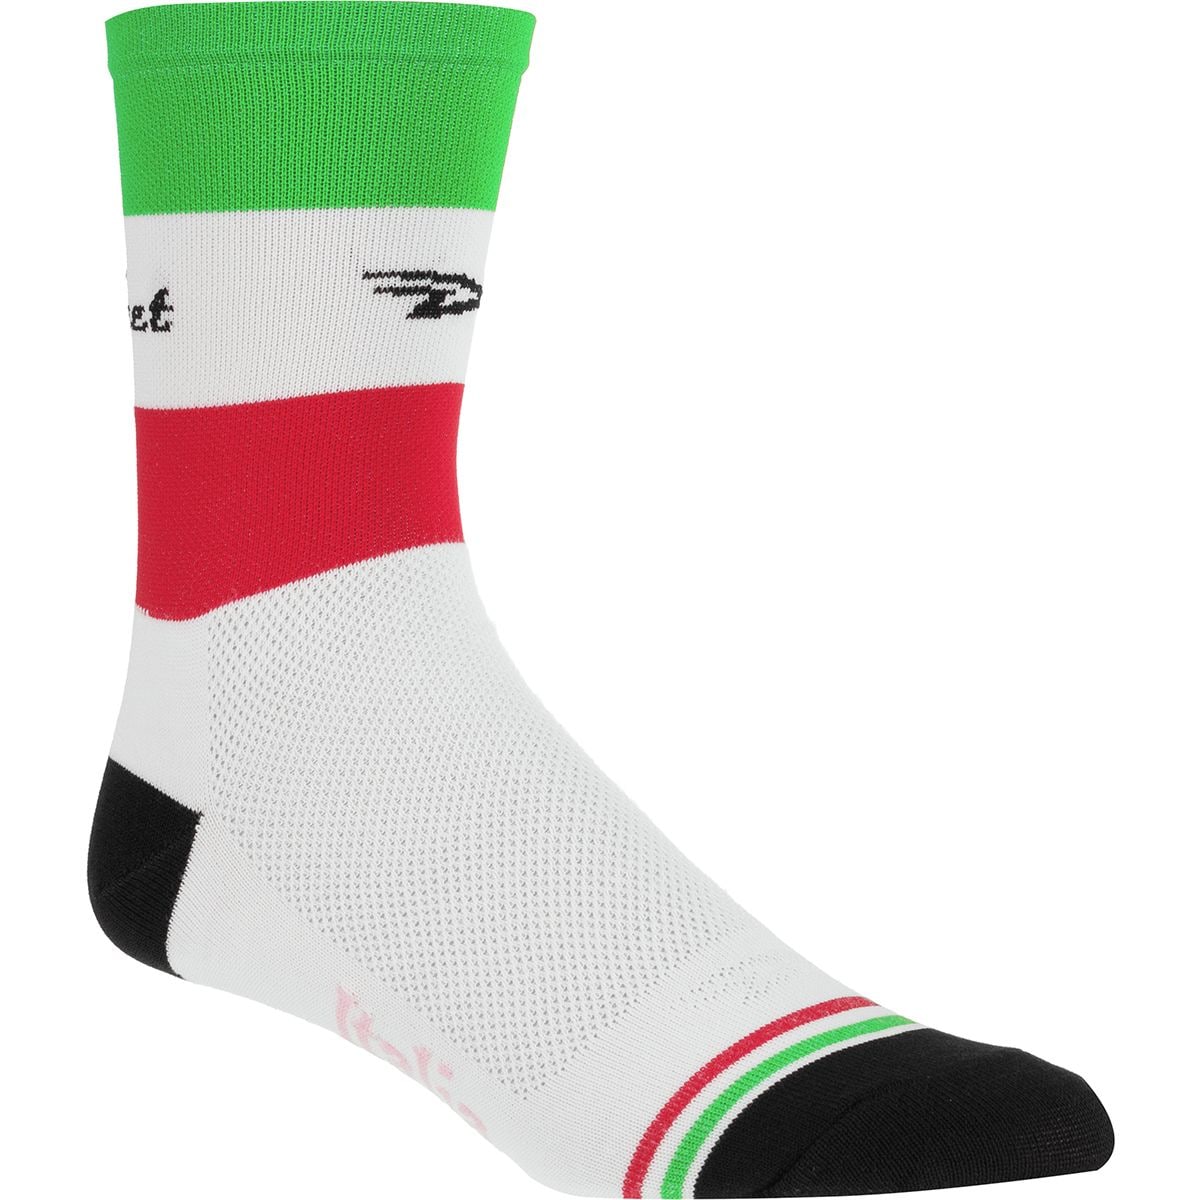 DeFeet Aireator Italia Hi Top 5in Sock Men's